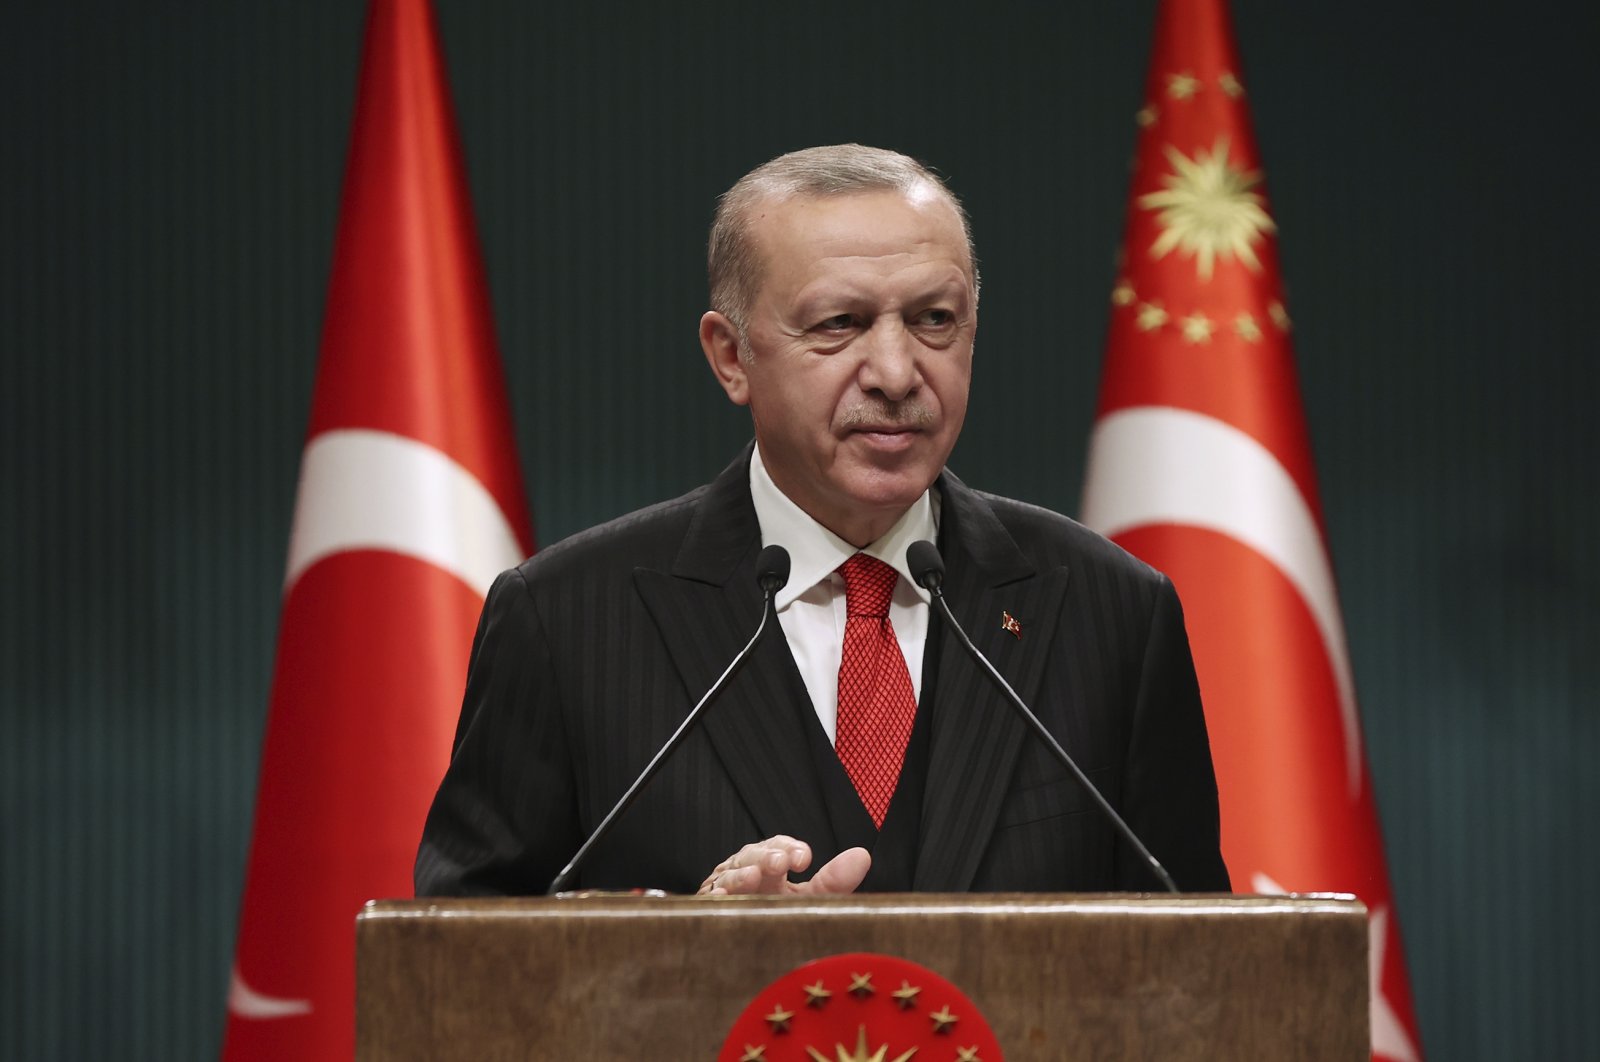 President Recep Tayyip Erdoğan speaks after a Cabinet meeting in Ankara, Turkey, Nov. 30, 2020. (AP Photo)